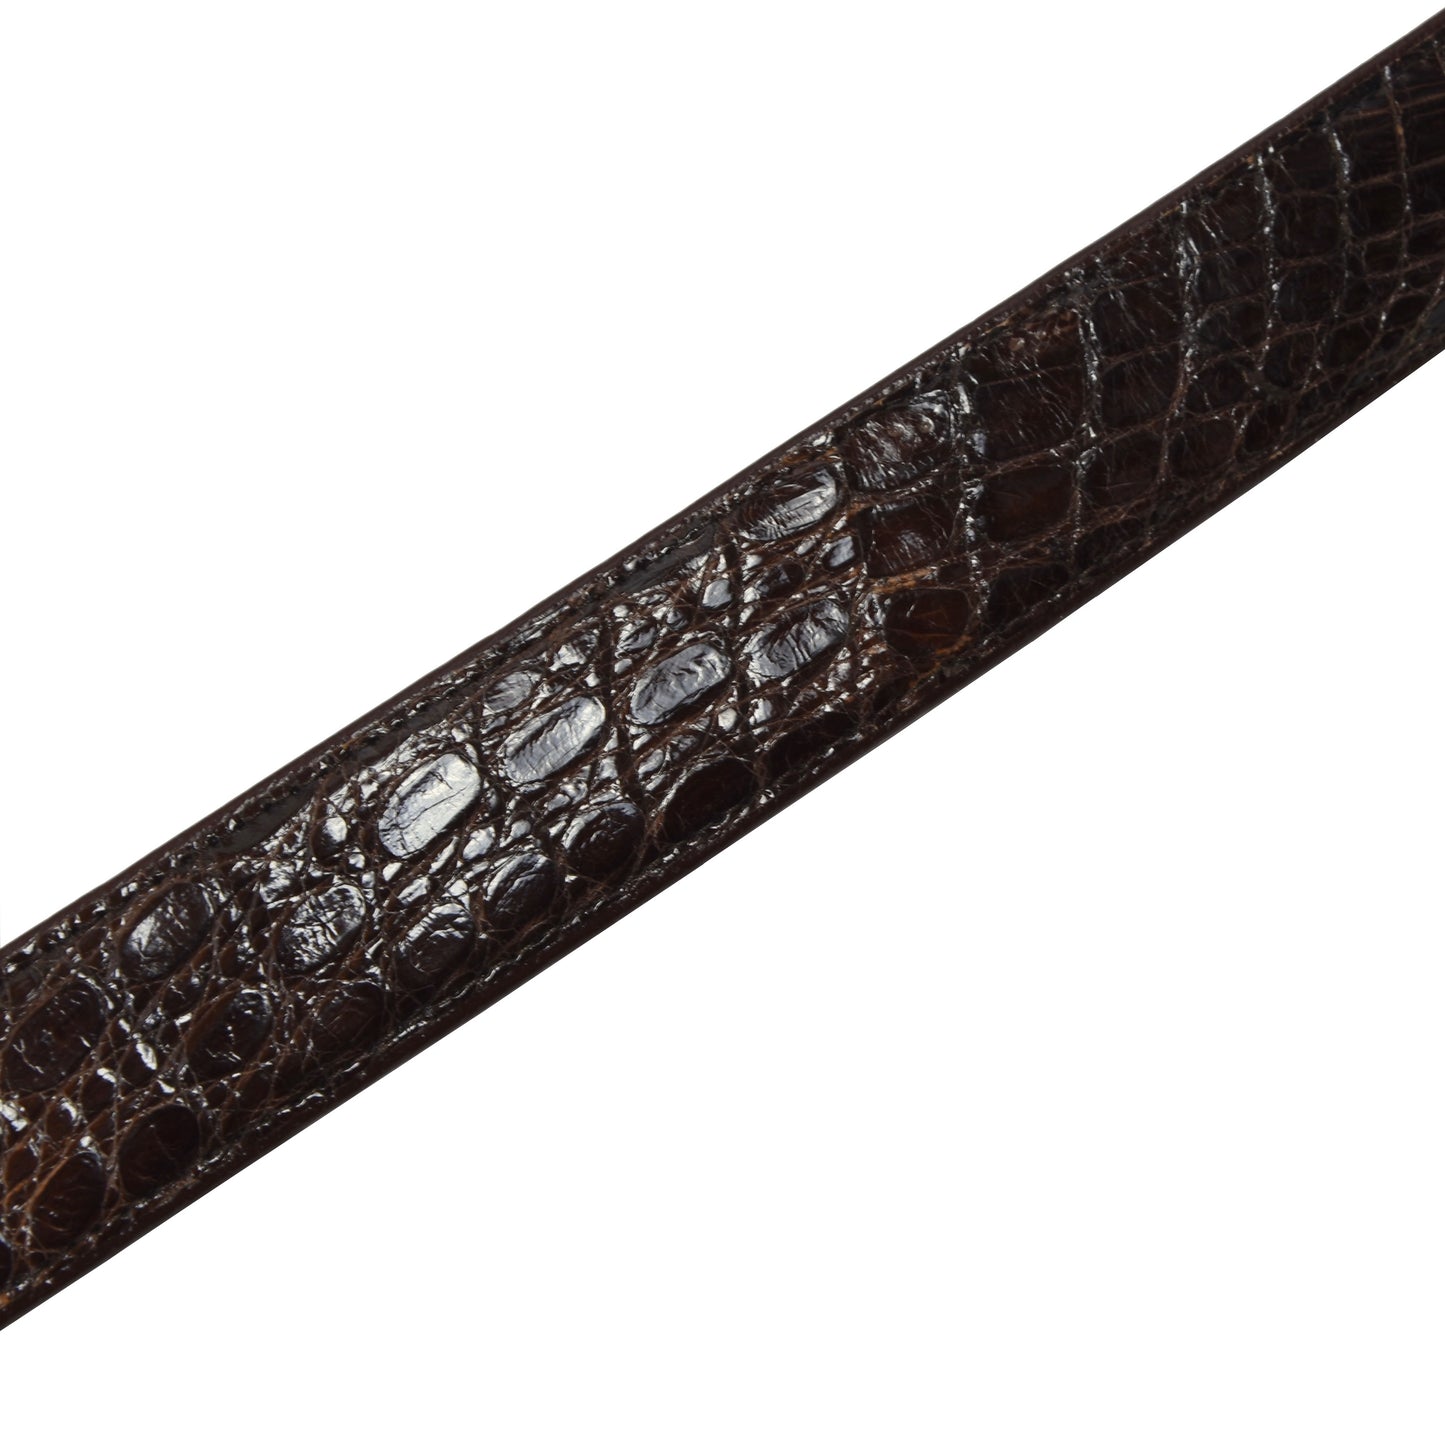 Echter Krokodilgürtel ca. 103,5 cm lang – braun